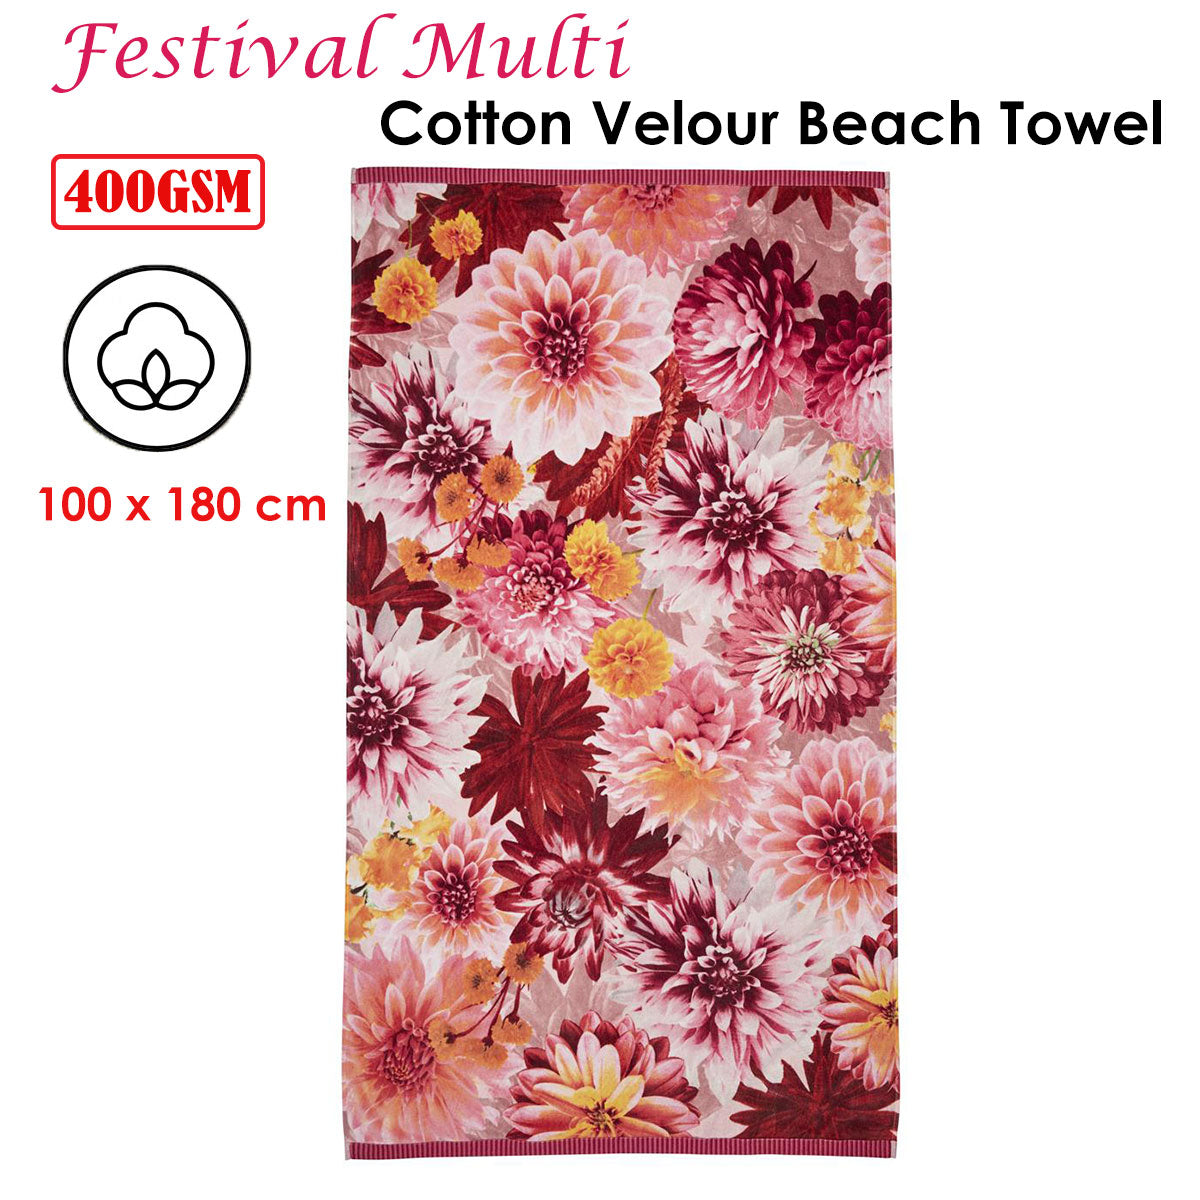 Bedding House Festival Multi Cotton Velour Beach Towel - Beach Towels - Zanlana Design and Home Decor